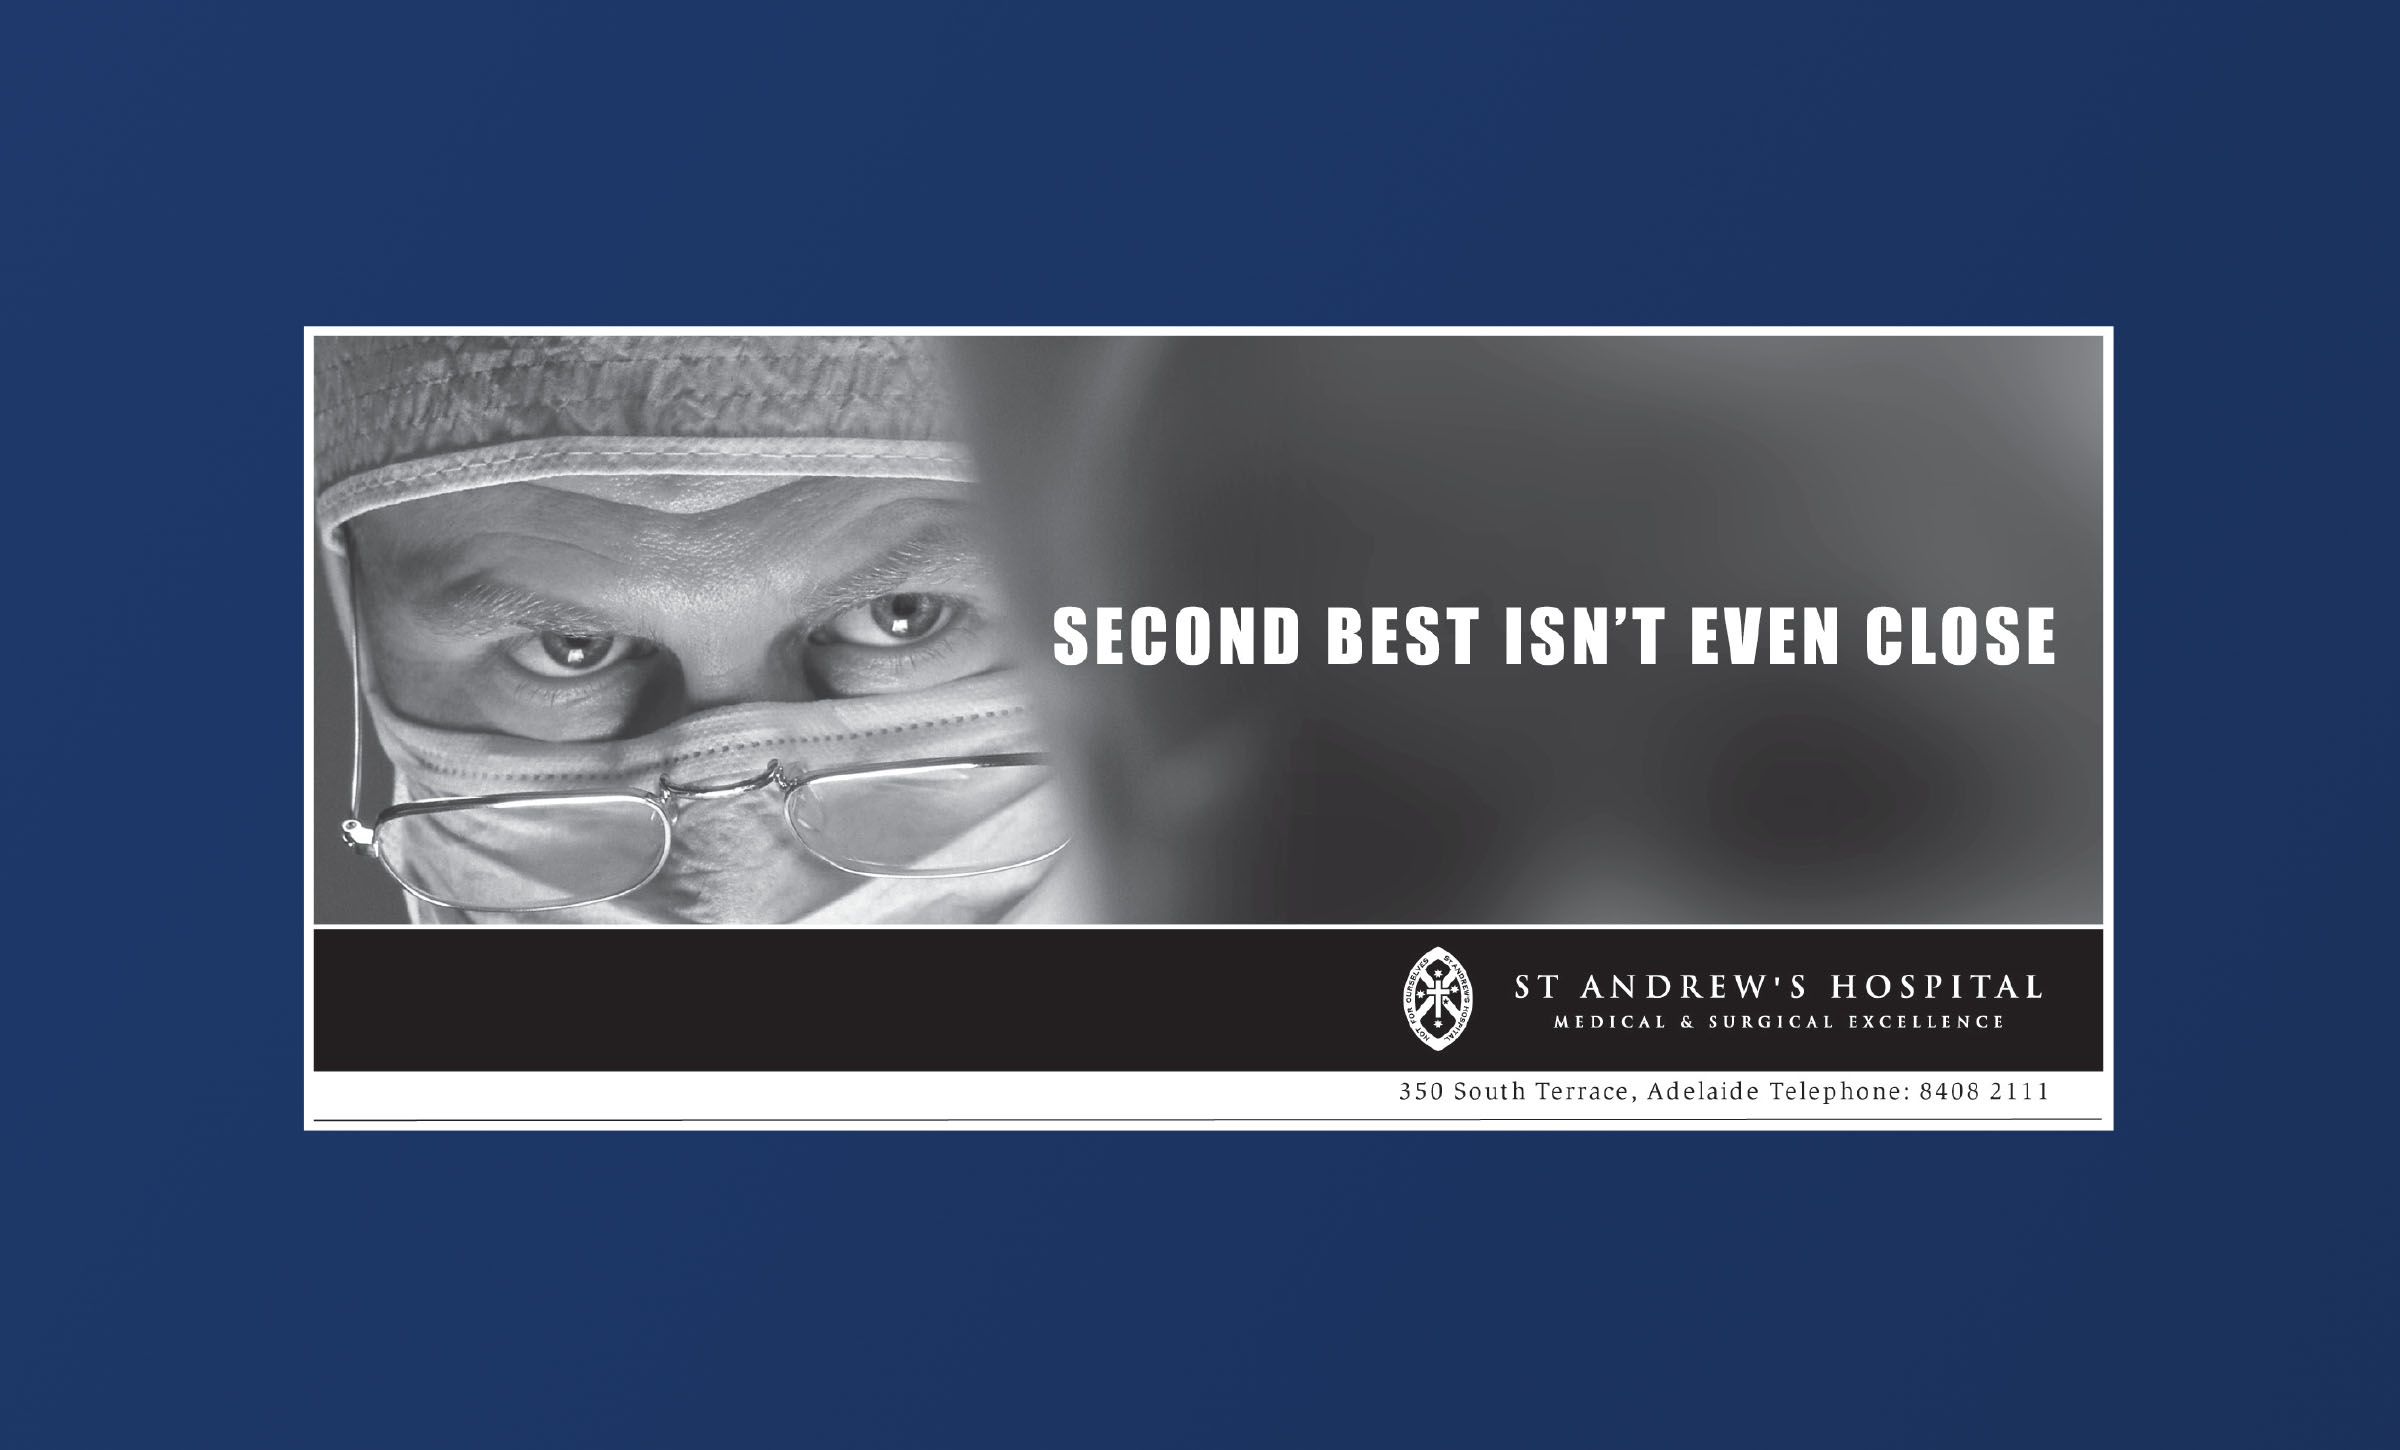 NRG Digital - St Andrew's Hospital Marketing Campaign